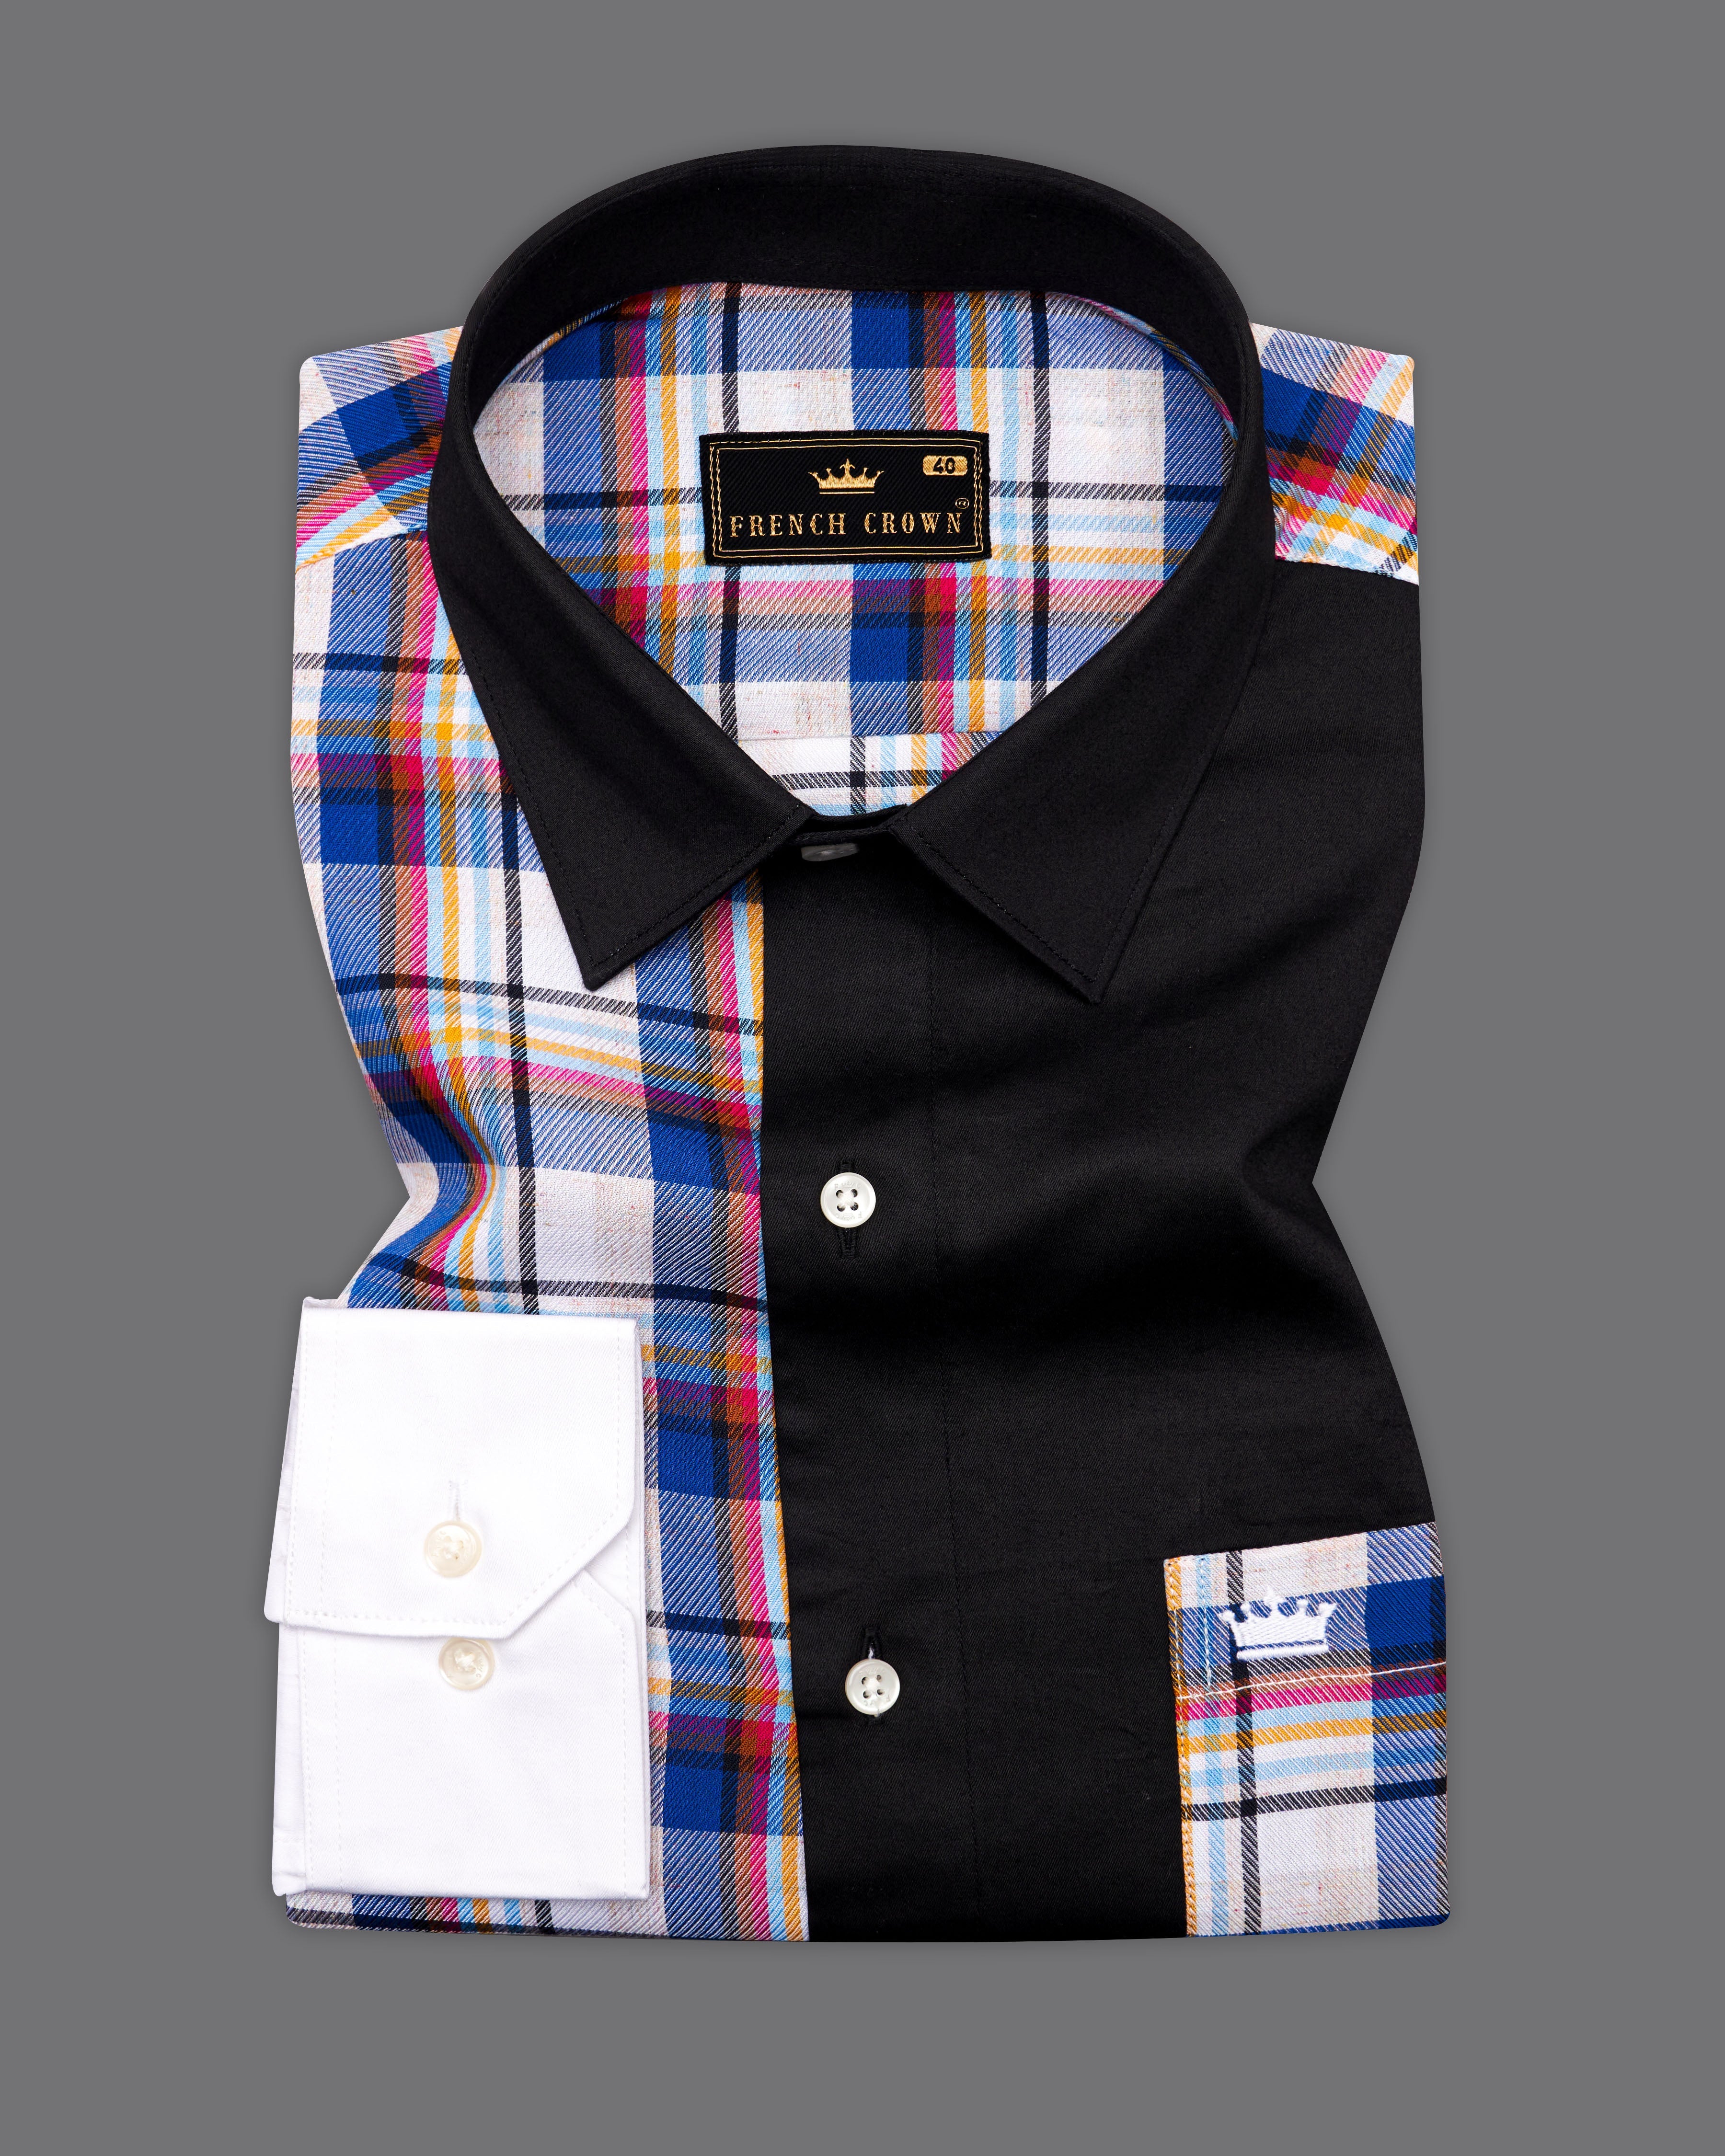 Bright White with Black and Cobalt Blue Checkered Super Soft Premium Cotton Designer Shirt 9757-P406-38, 9757-P406-H-38, 9757-P406-39, 9757-P406-H-39, 9757-P406-40, 9757-P406-H-40, 9757-P406-42, 9757-P406-H-42, 9757-P406-44, 9757-P406-H-44, 9757-P406-46, 9757-P406-H-46, 9757-P406-48, 9757-P406-H-48, 9757-P406-50, 9757-P406-H-50, 9757-P406-52, 9757-P406-H-52